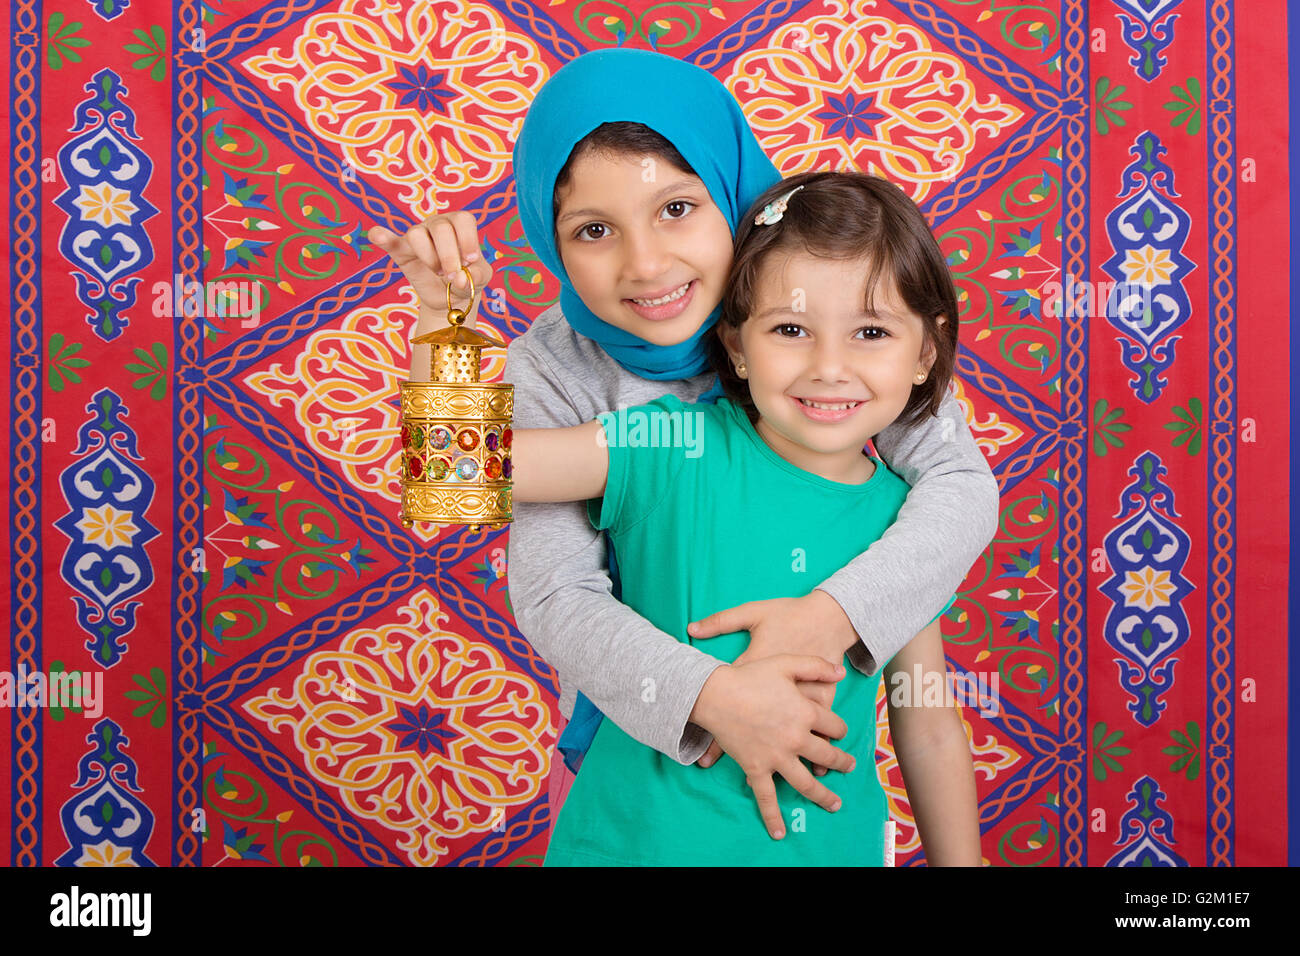 Happy Family in Ramadan - Two Muslim sisters celebrating Ramadan Stock Photo